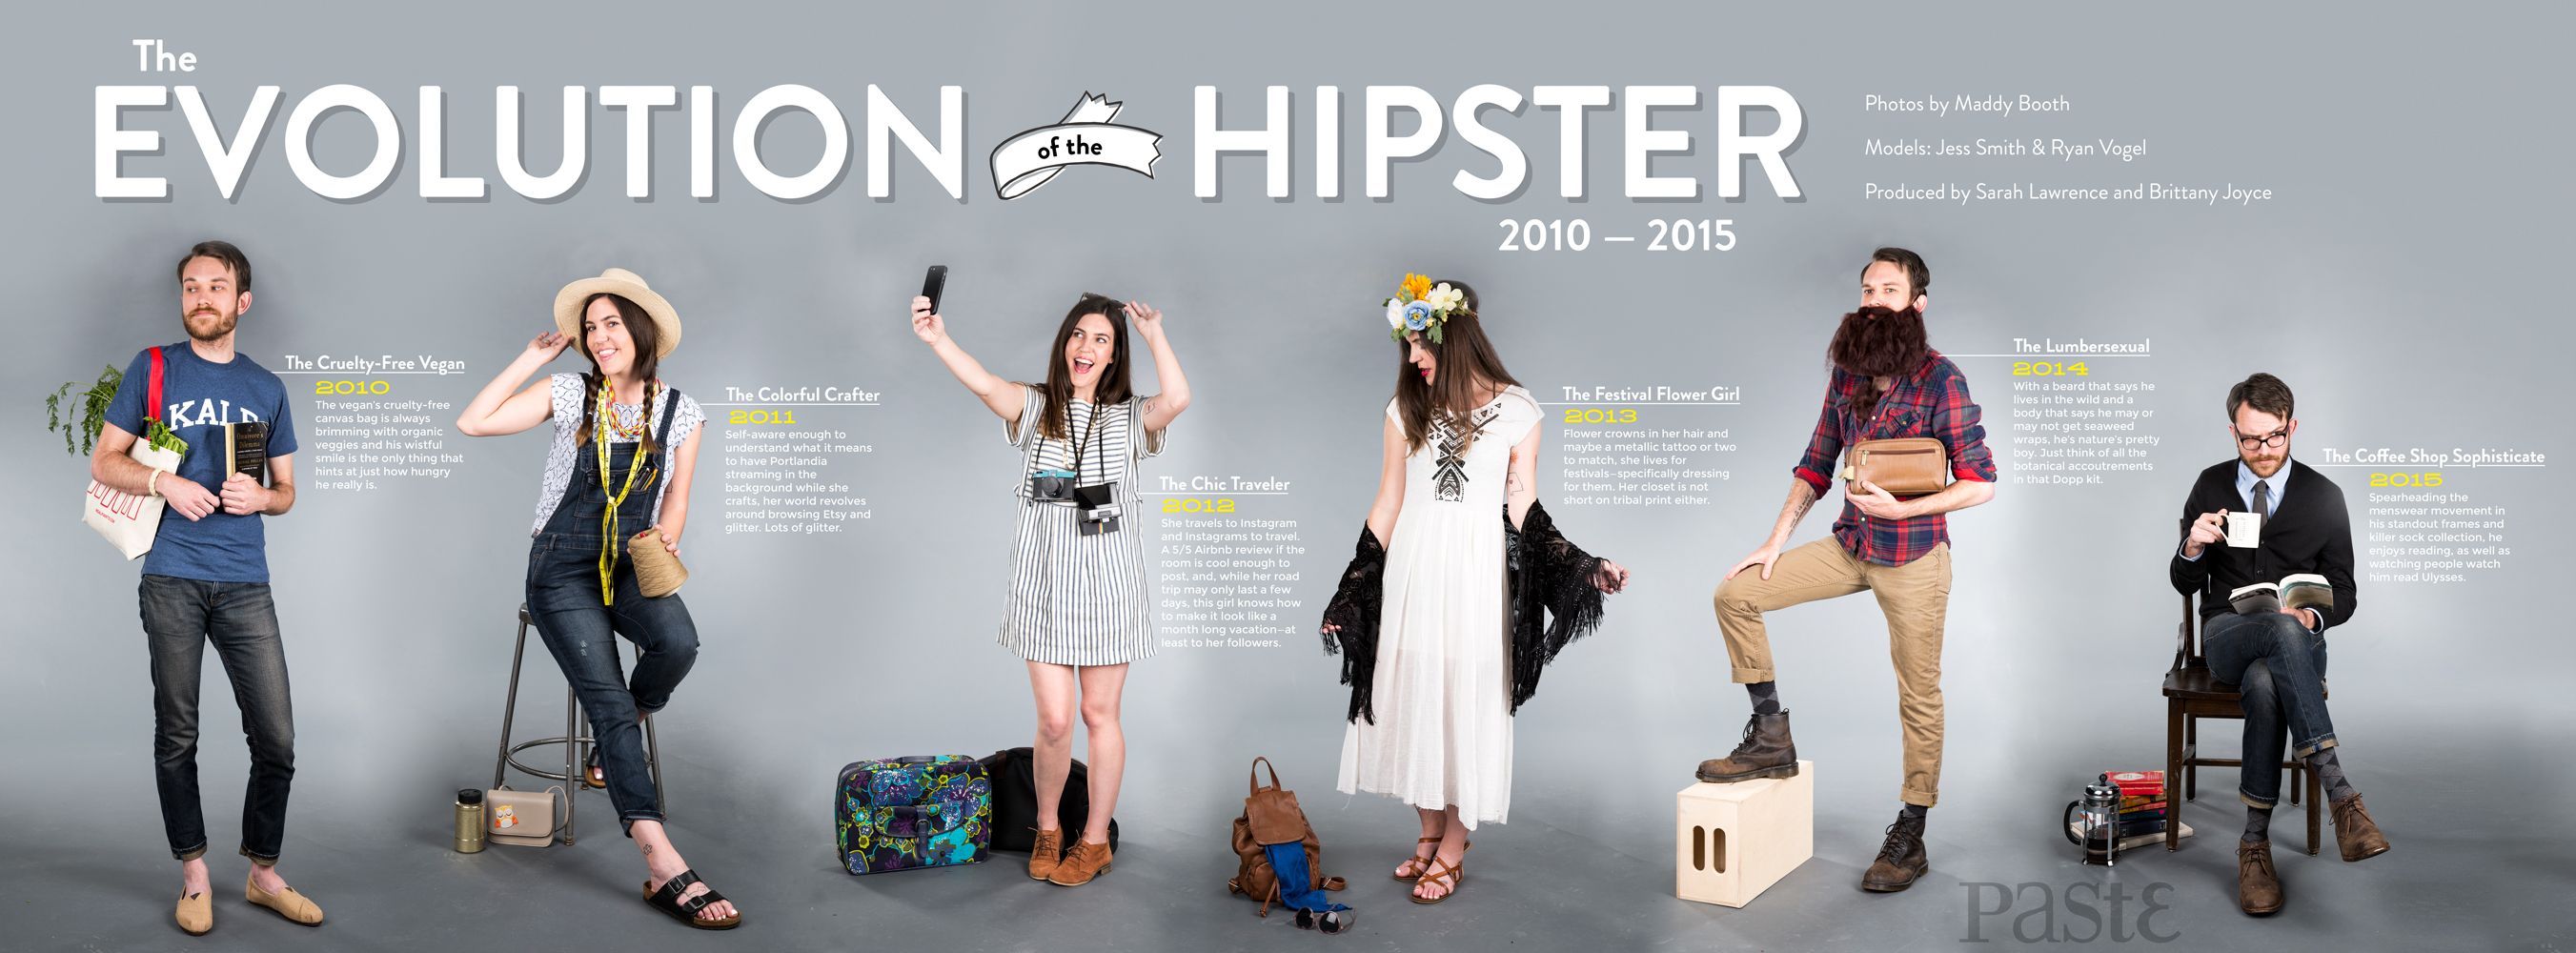 Evolution-of-a-Hipster_FINAL2015.jpg